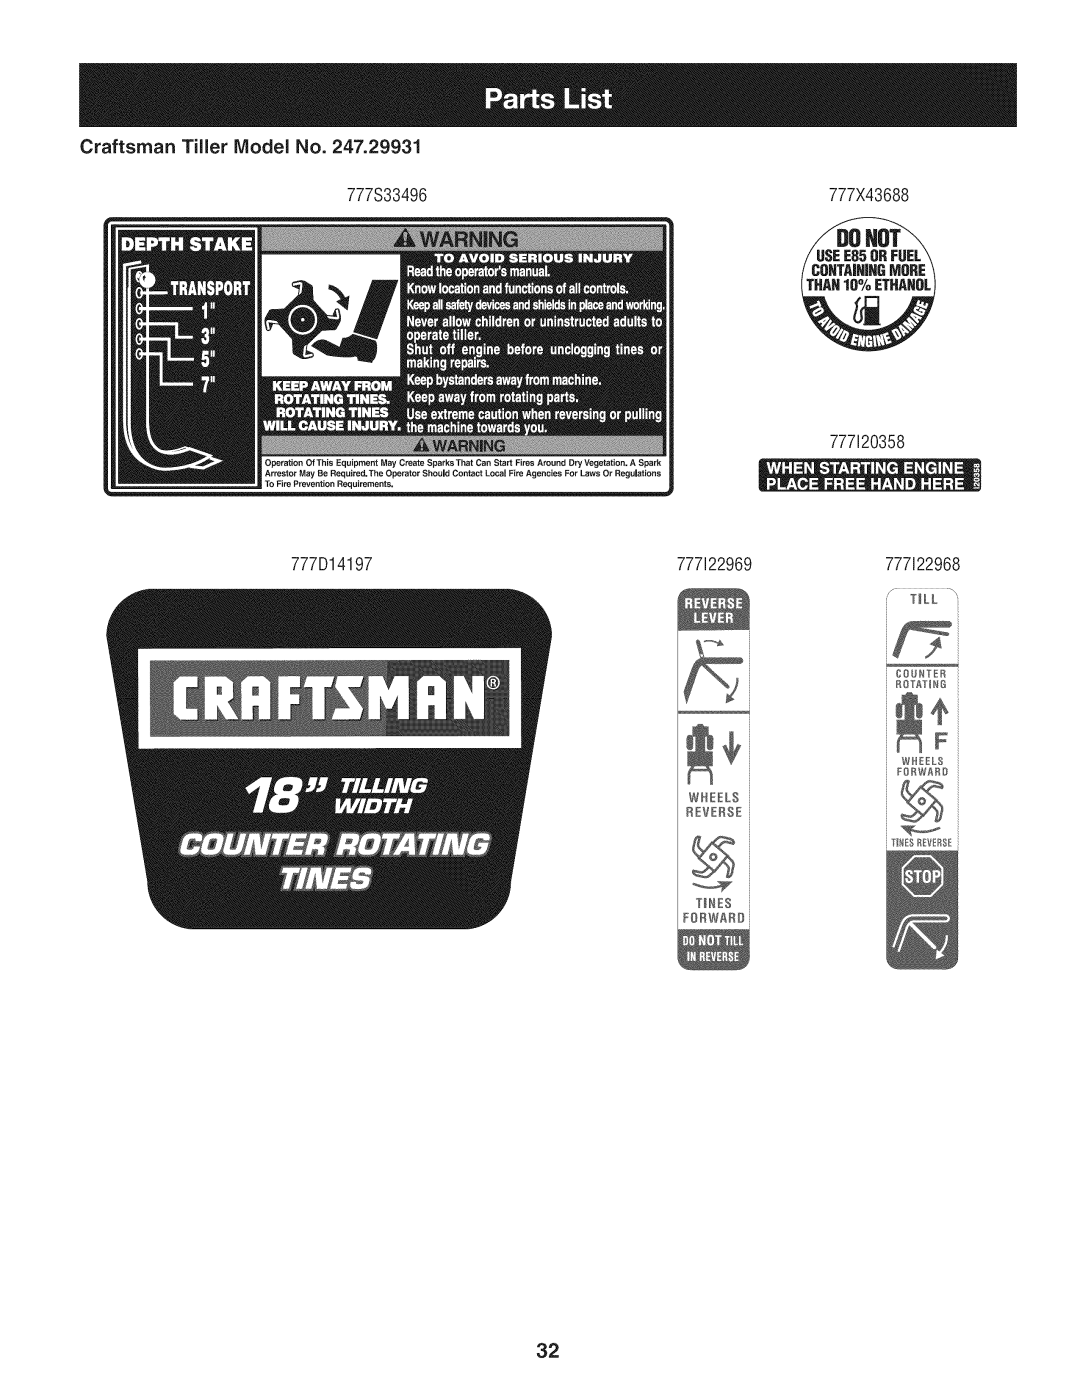 Craftsman 247.29931 manual Craftsman Tiler IViodel No, USEE850R, Tines, Wheels Reverse, Eorwari, Ioinyei Rqtatini Wheels 